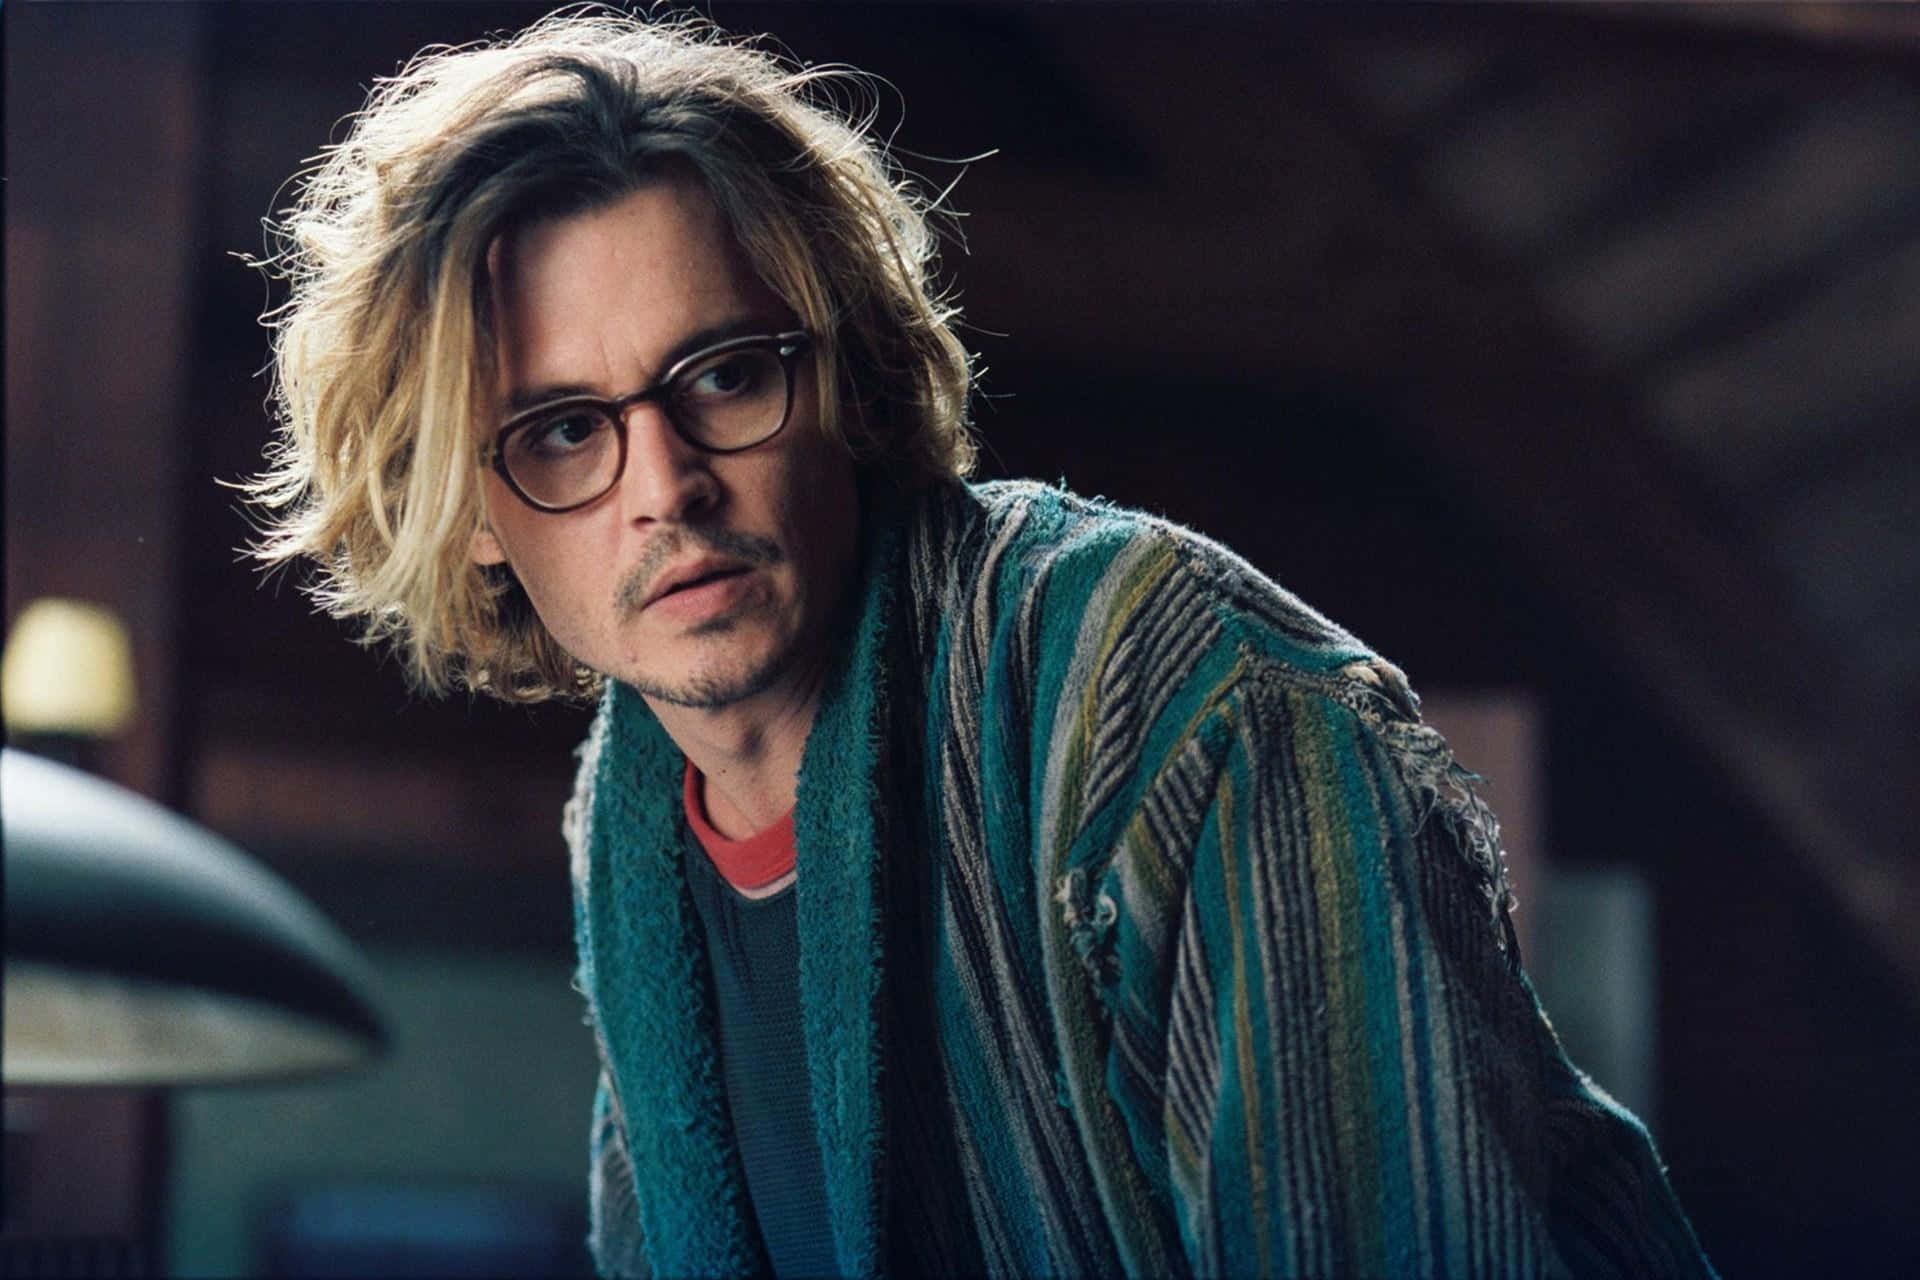 Johnny Depp - A Renaissance Man of Hollywood